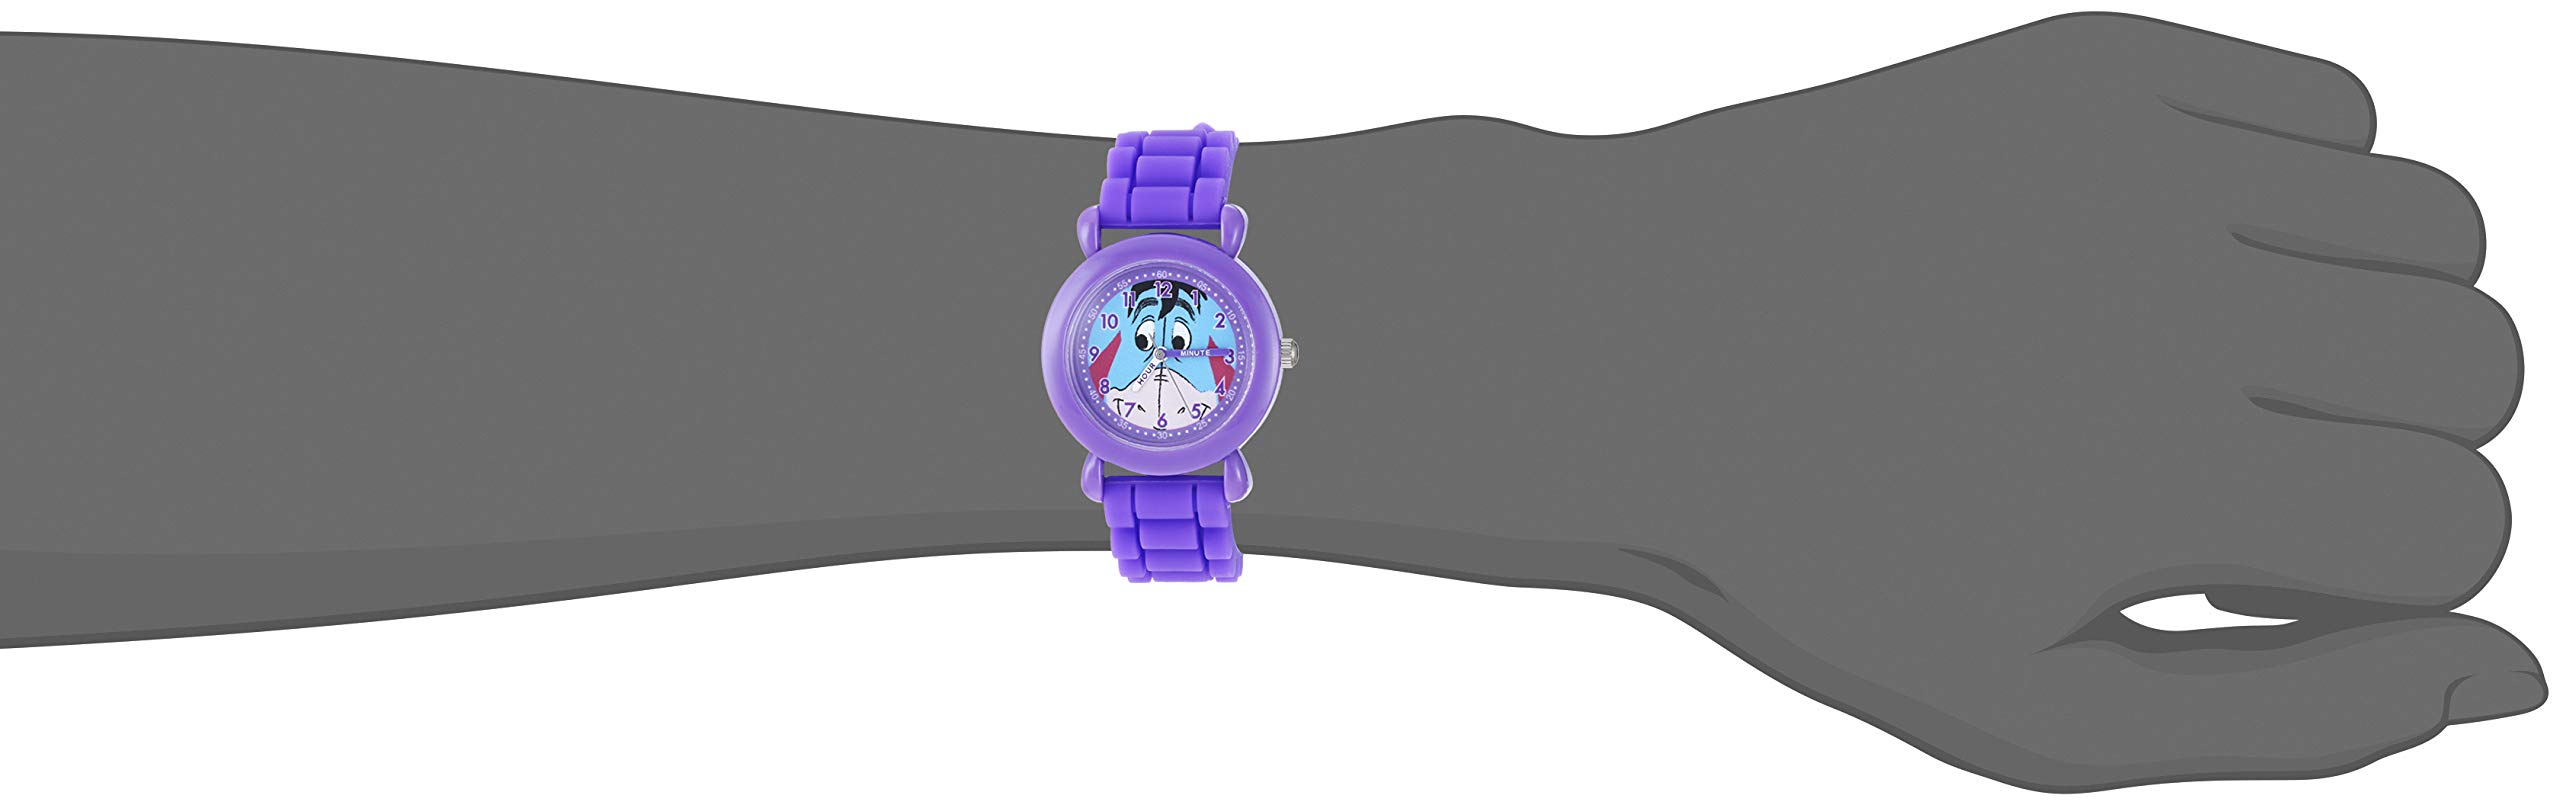 Disney Winnie The Pooh Kids' WDS000622 All About Me Analog Display Analog Quartz Purple Watch